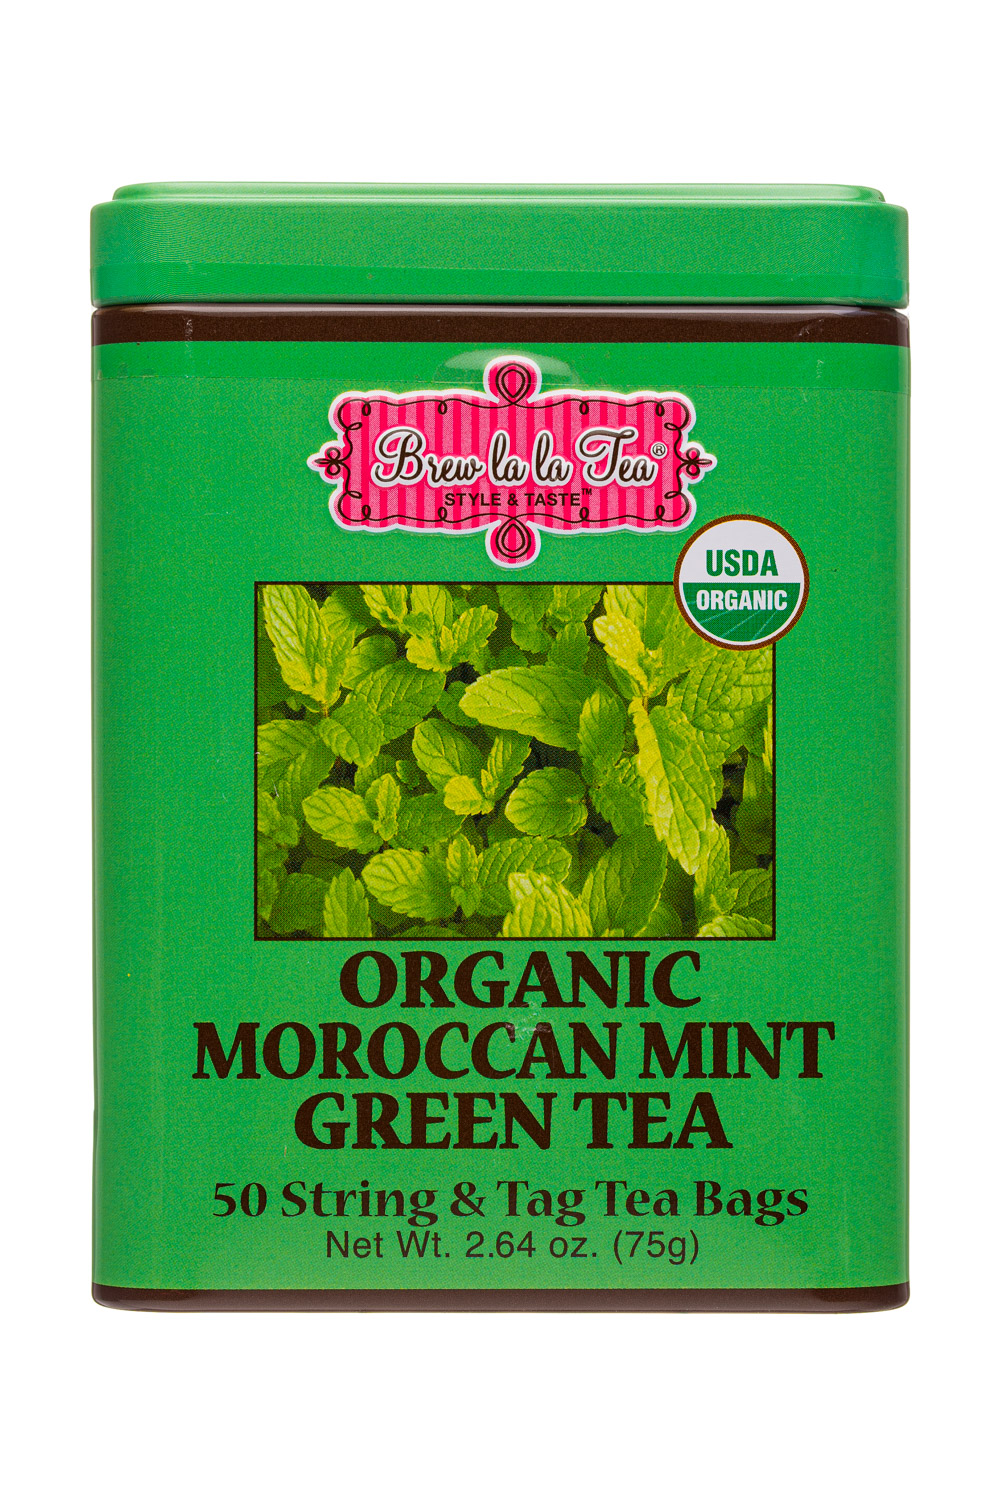 Brew La La Organic Green Tea - Natural Ginger Peach Flavor - 50 Double  Chambered Tea Bags - Low Caffeine Tea - USDA Certified Organic - NonGMO -  Gluten Free